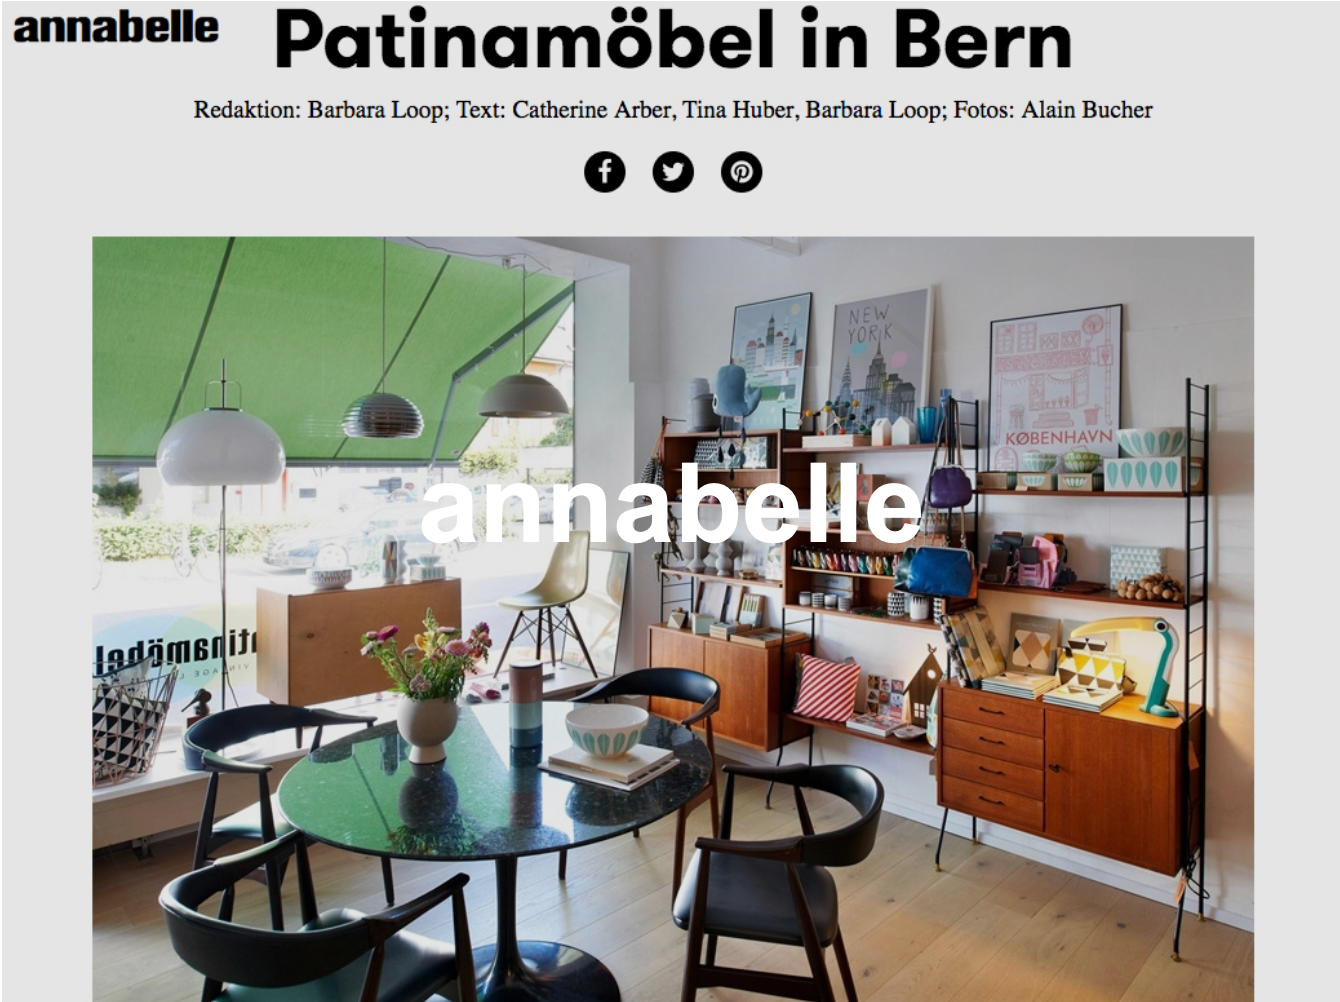 annabelle – Patinamöbel in Bern